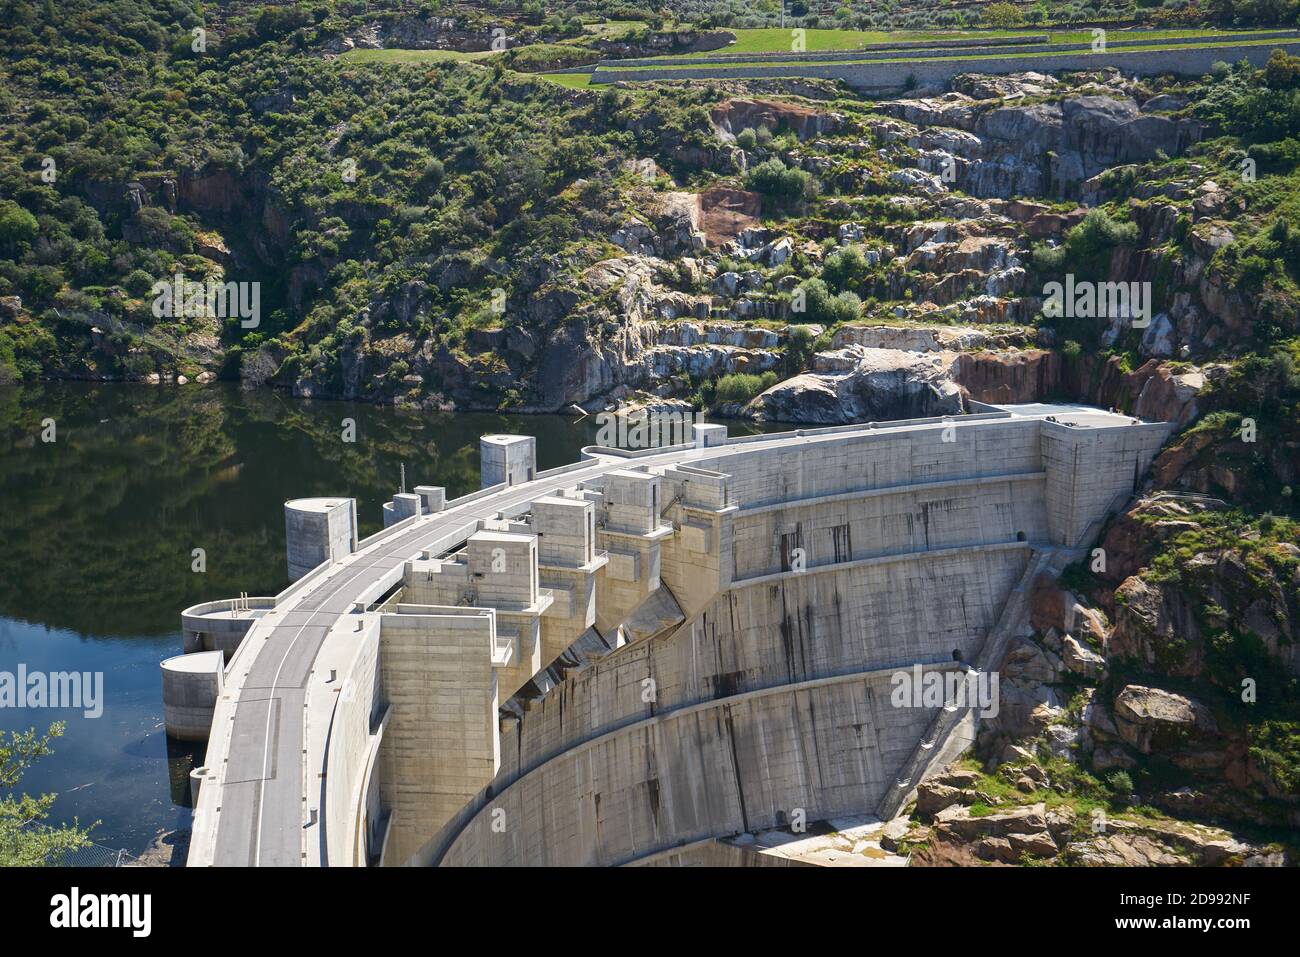 Foz Tua dam barragem river in Portugal Stock Photo